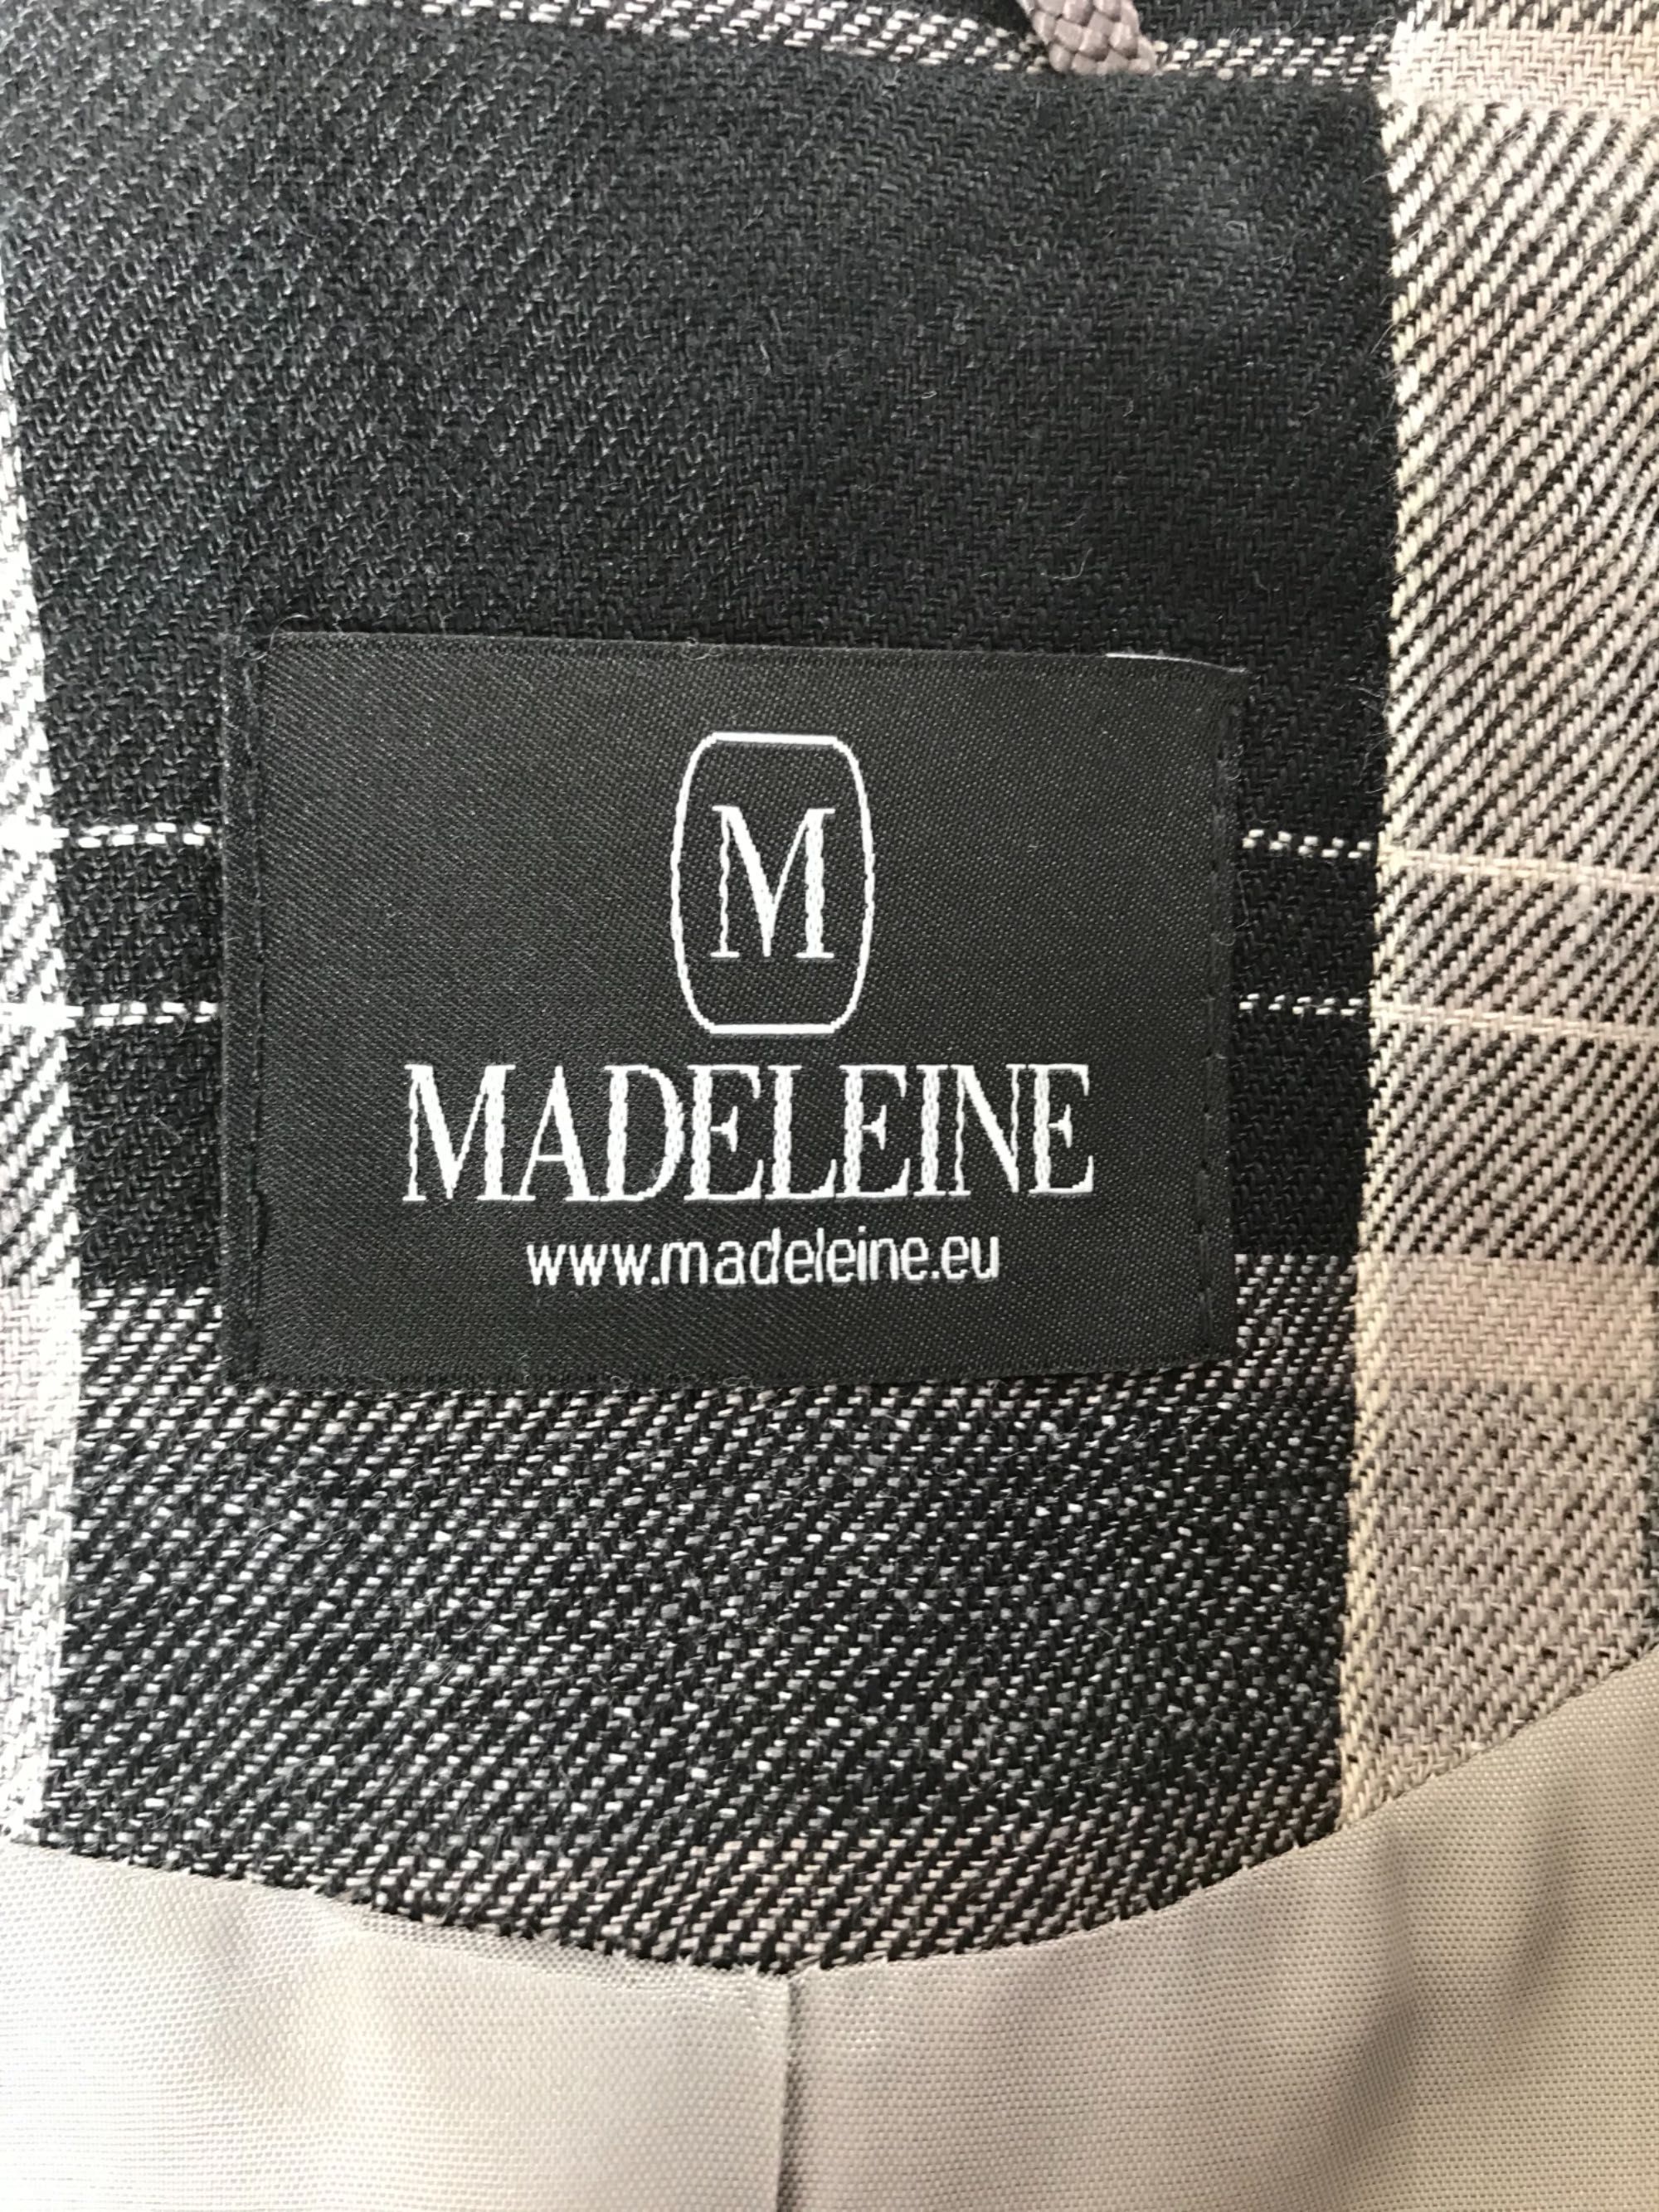 Madeleine żakiet damski L 100% len